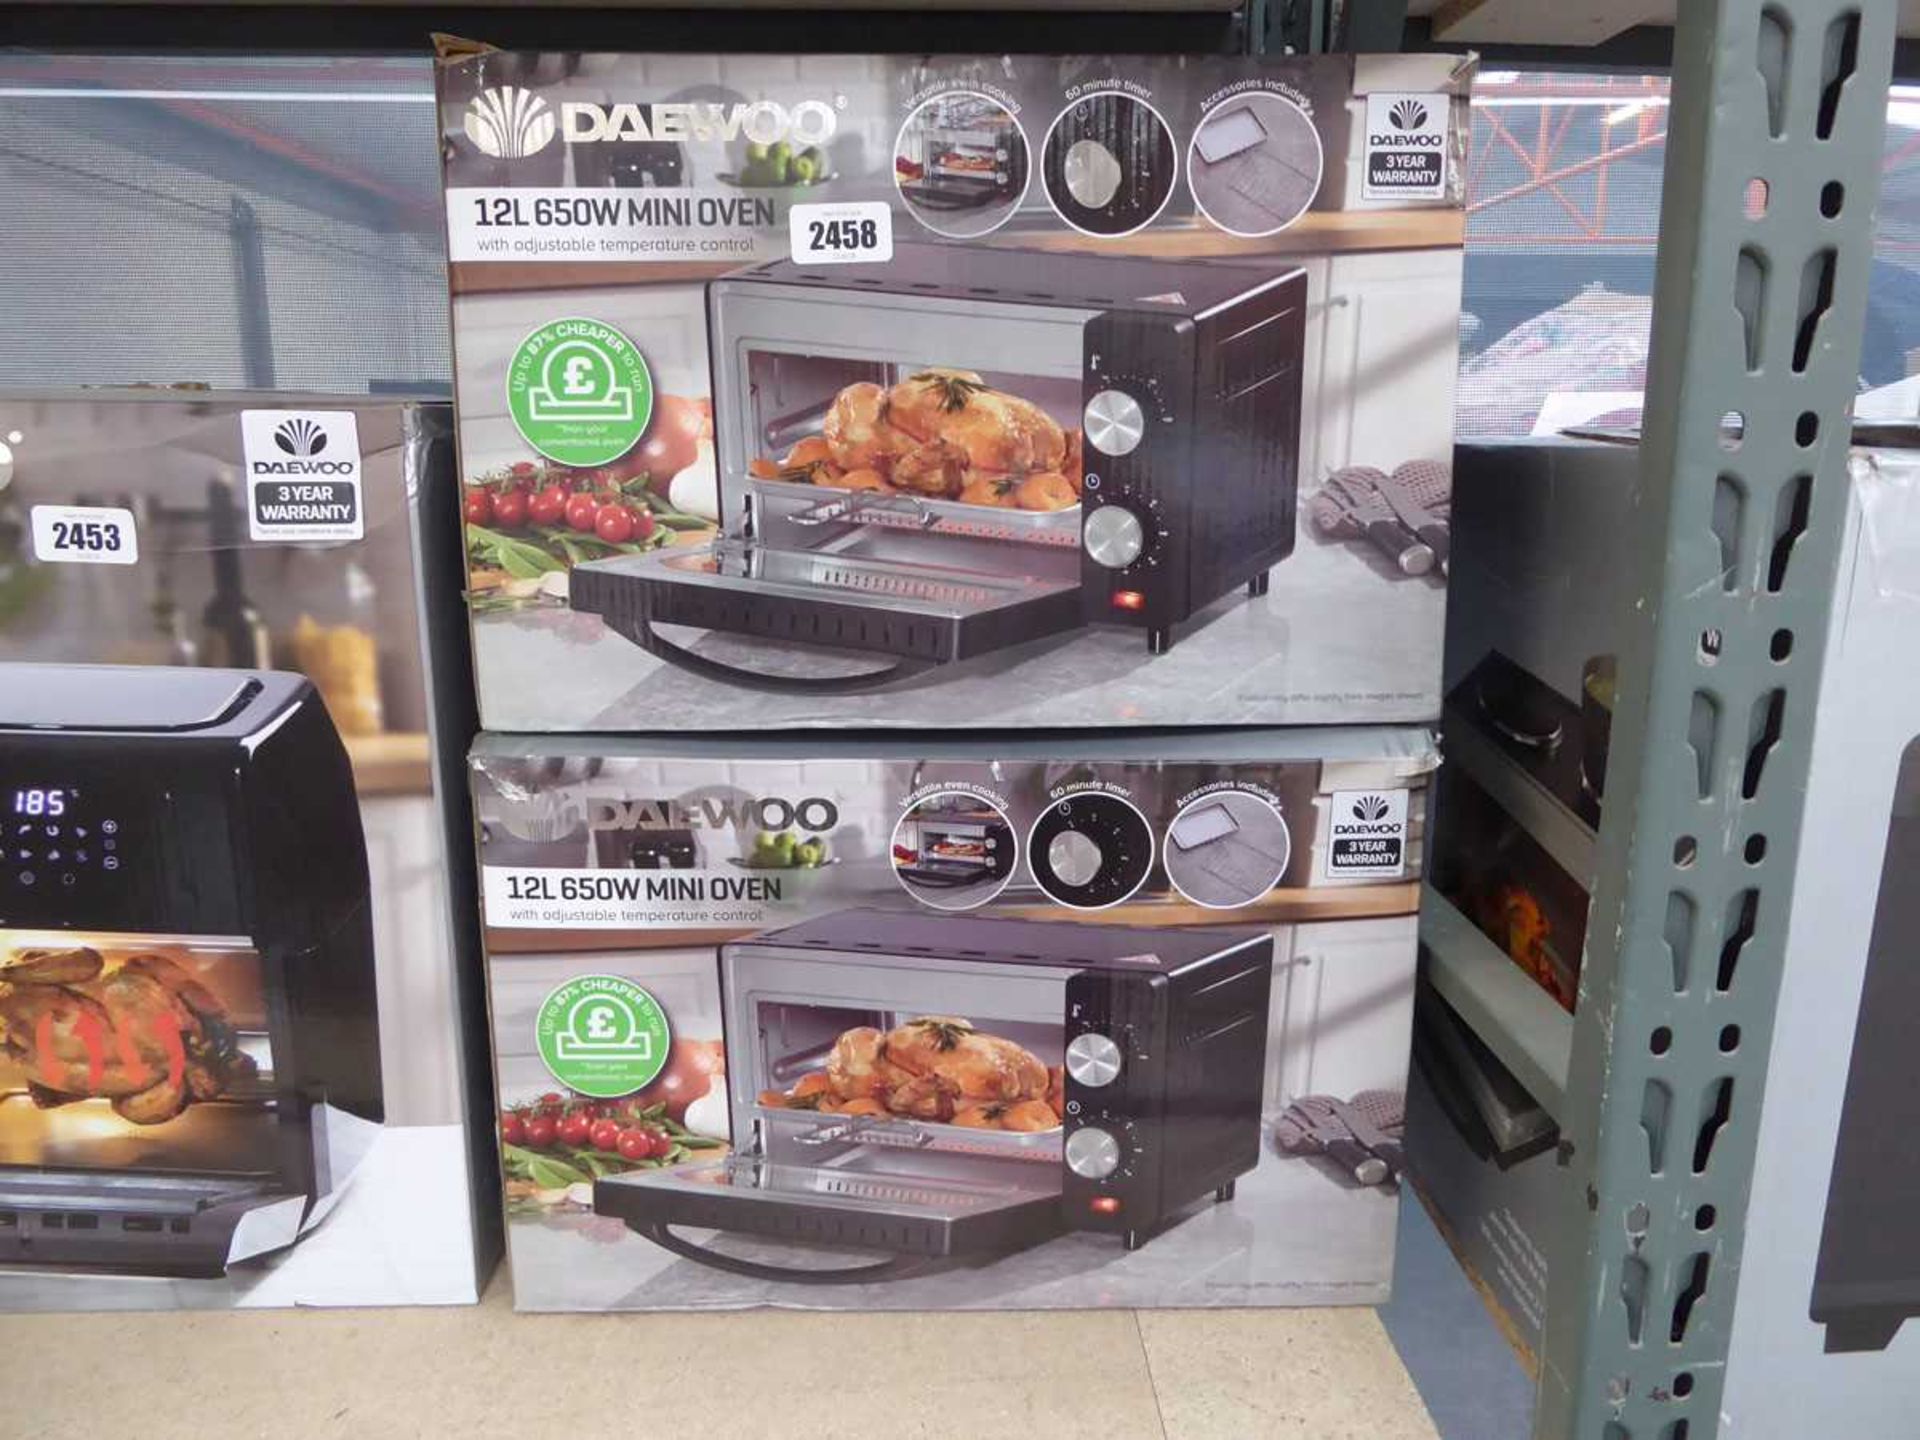 2 boxed Daewoo 12L mini ovens